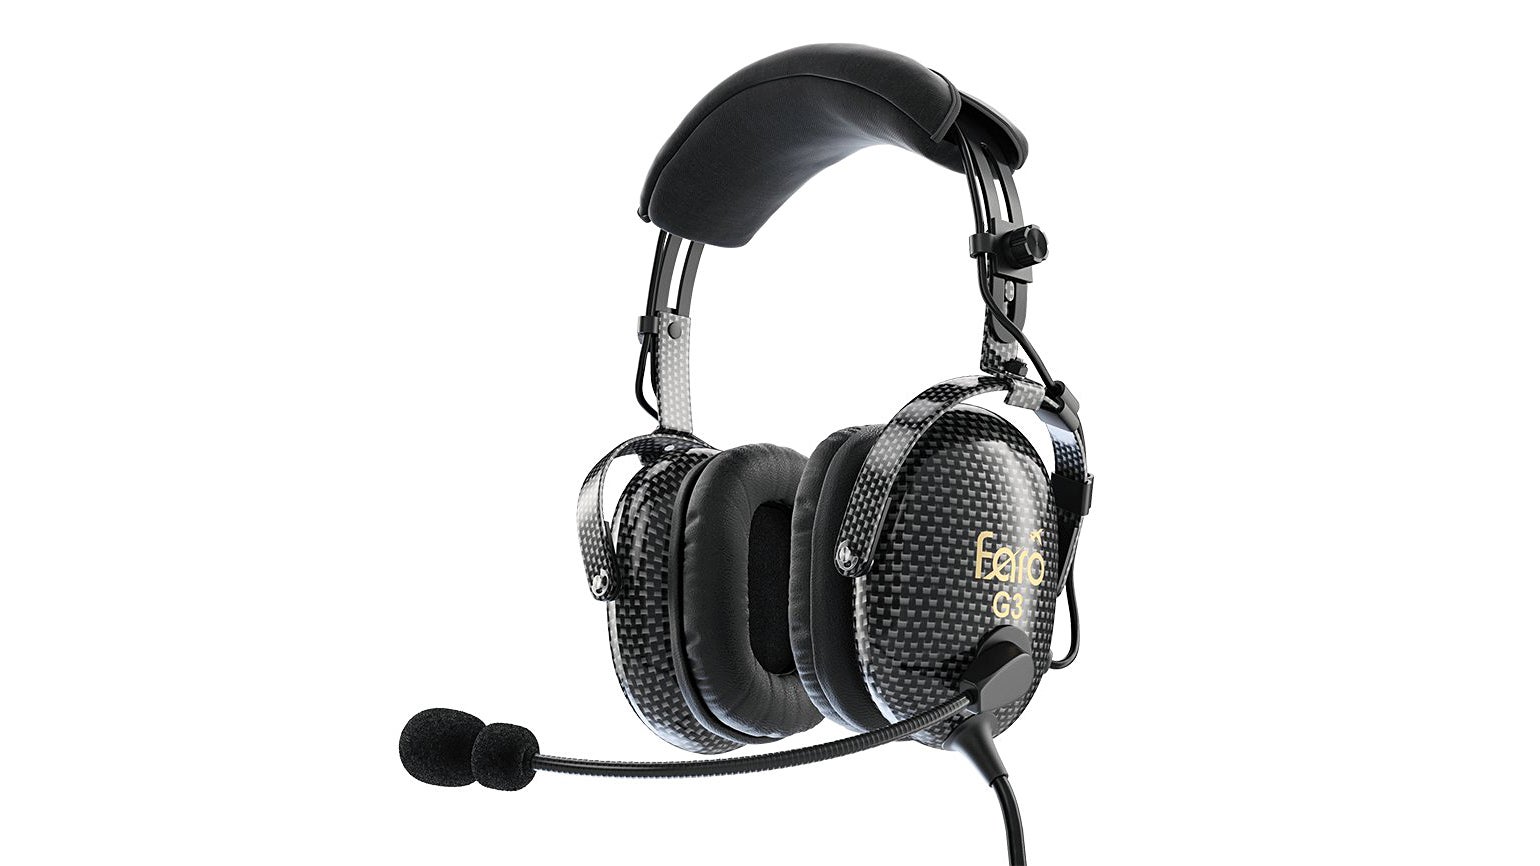 FARO G3 ANR Aviation Headset